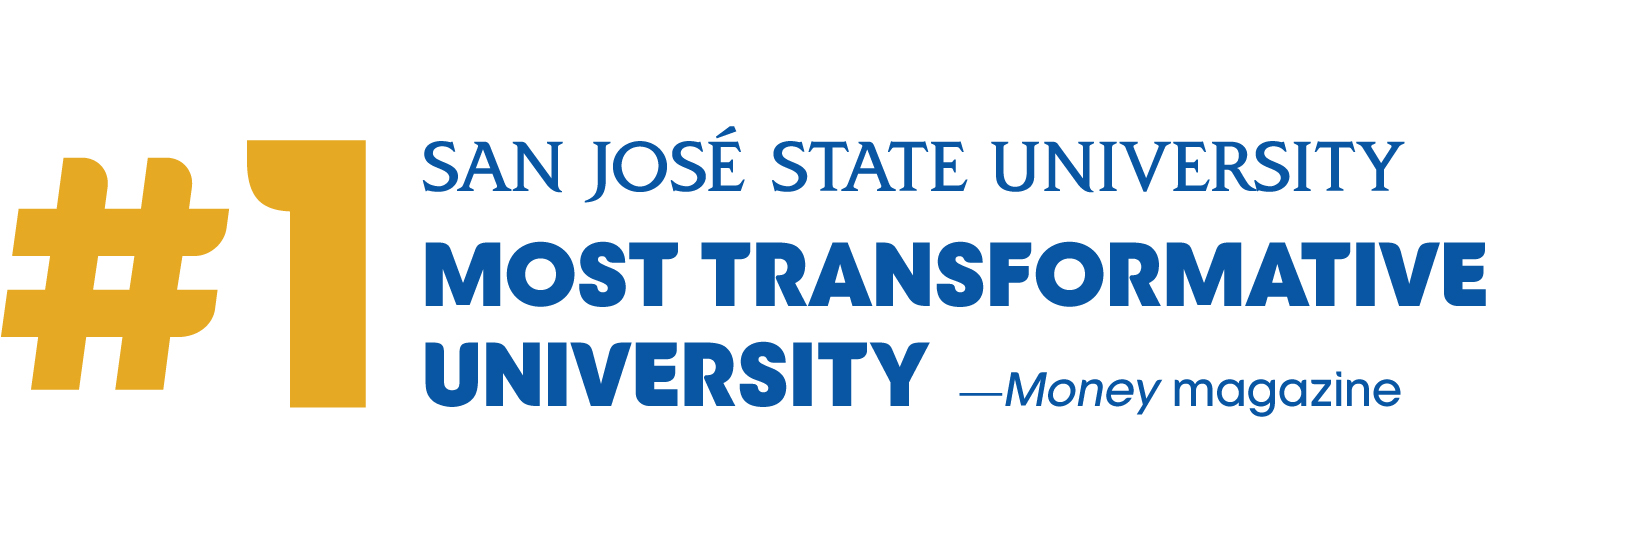 SJSU #1 Most Transformative University